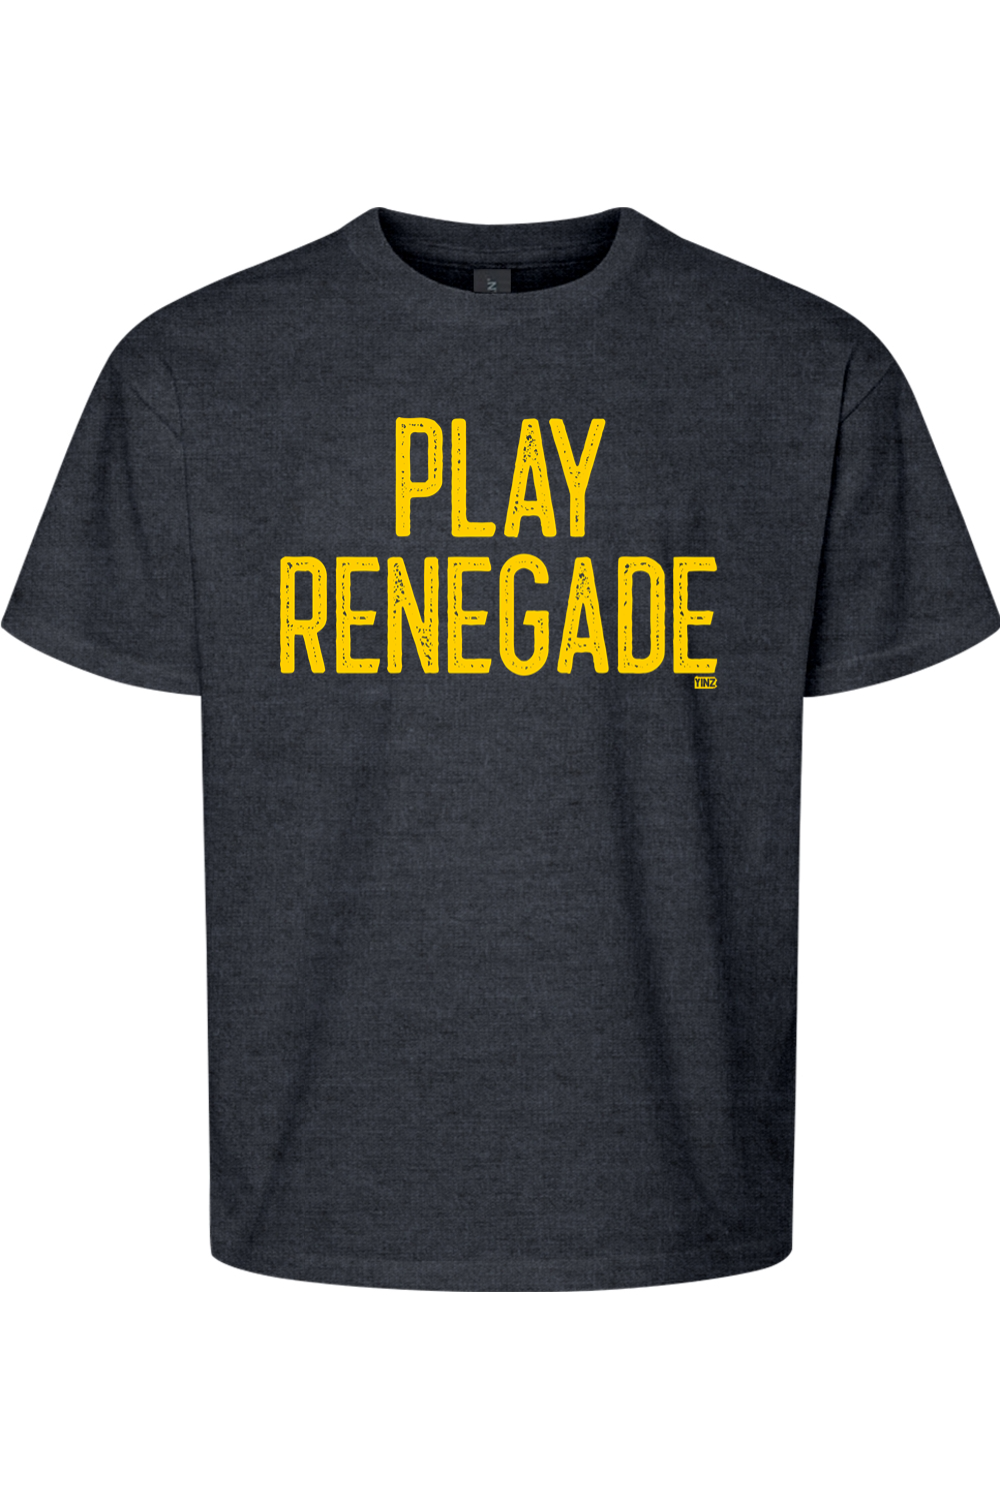 Play Renegade - Kids Tee - Yinzylvania